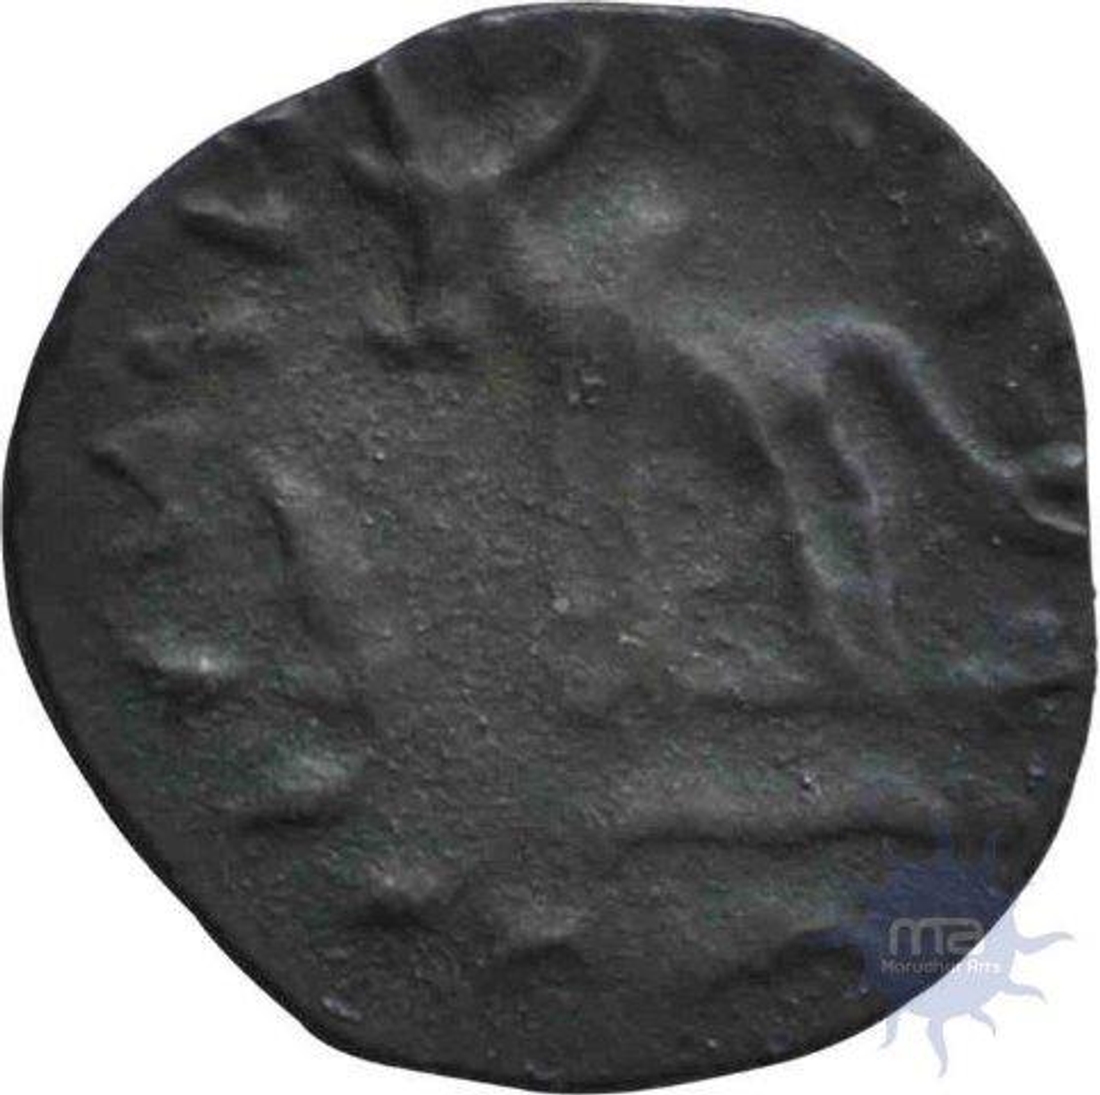 Copper Kasu Coins of Banavasi Region of Feudatory of Satavahanas.